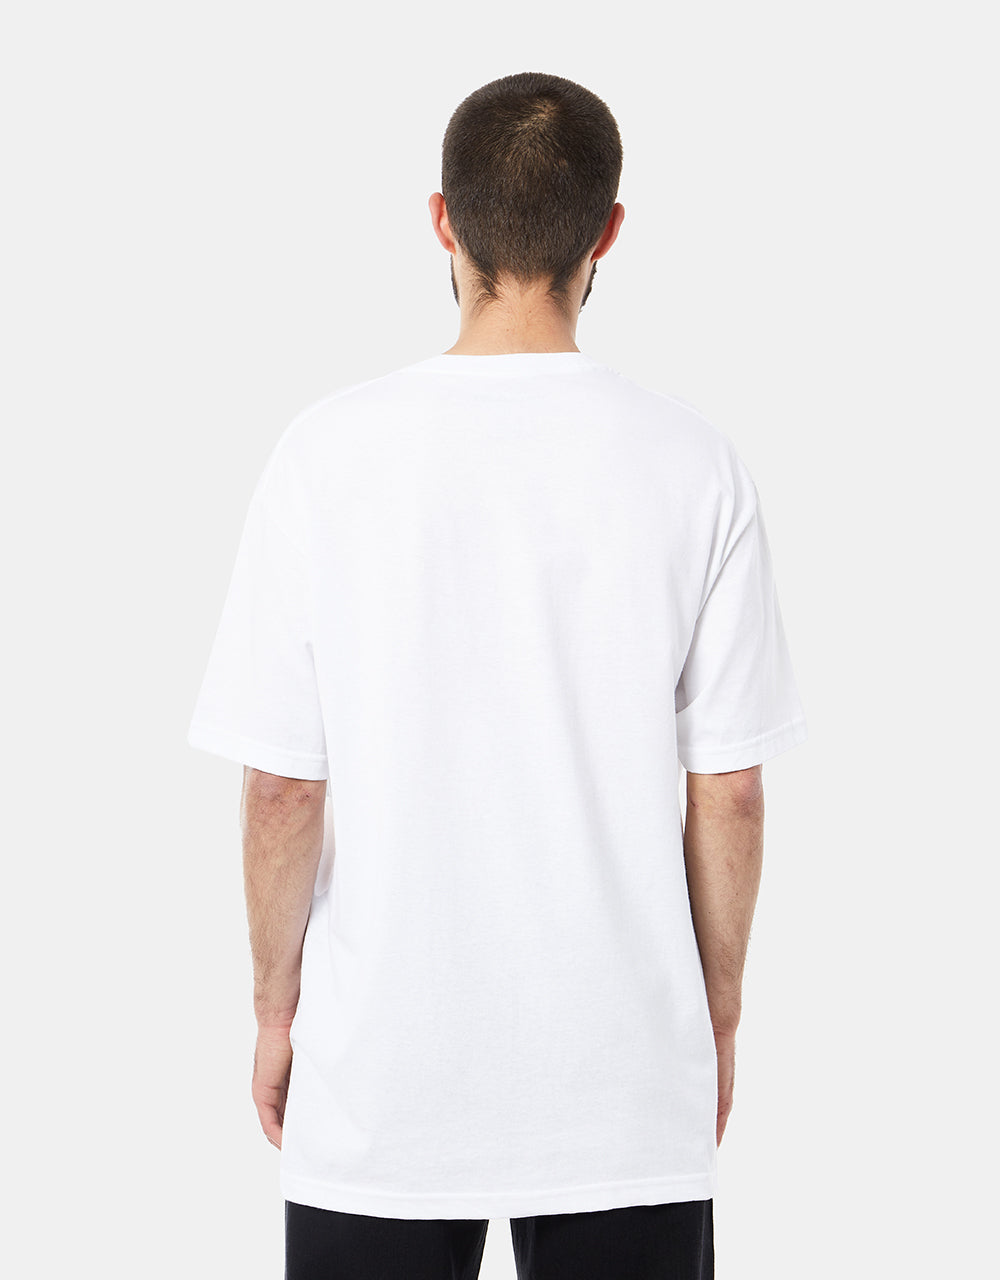 Quasi Faceoff T-Shirt - White